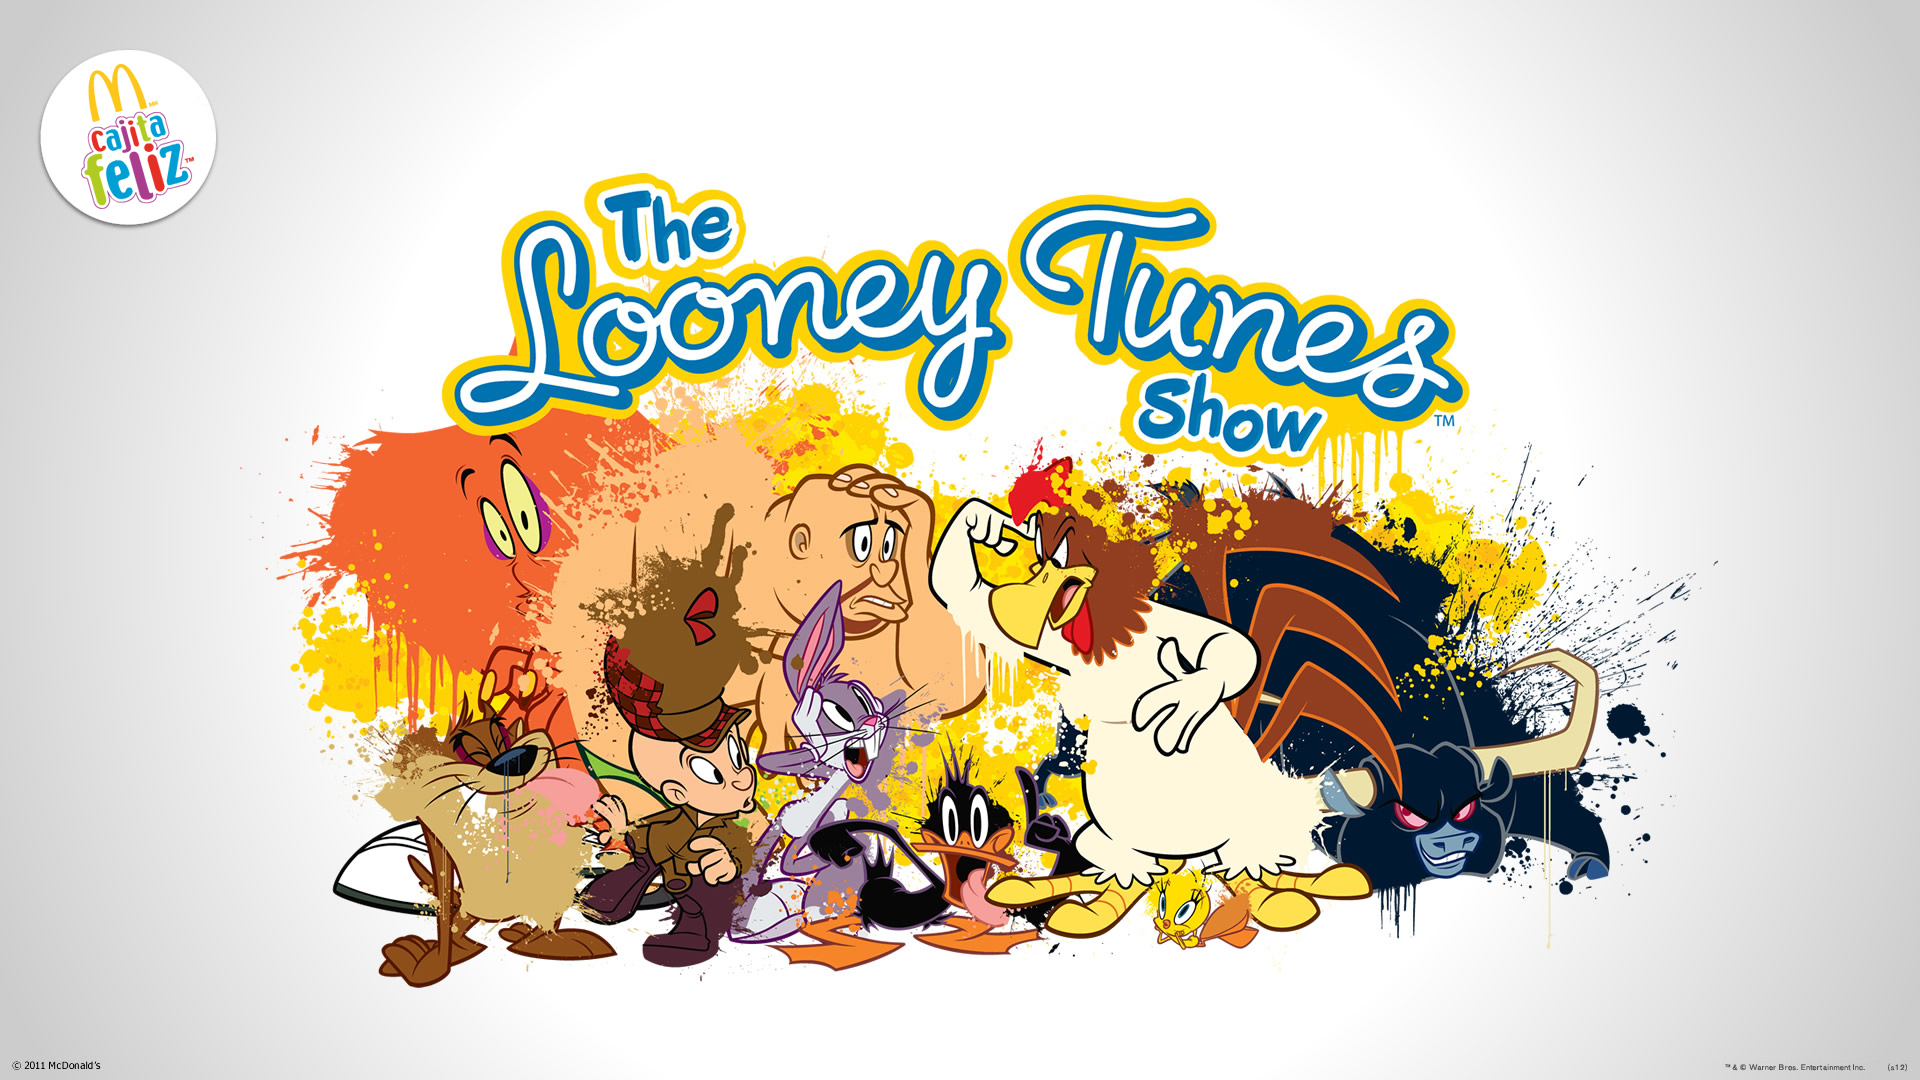 Looney Tunes Cartoon - Wallpaper, High Definition, High Quality, Widescreen